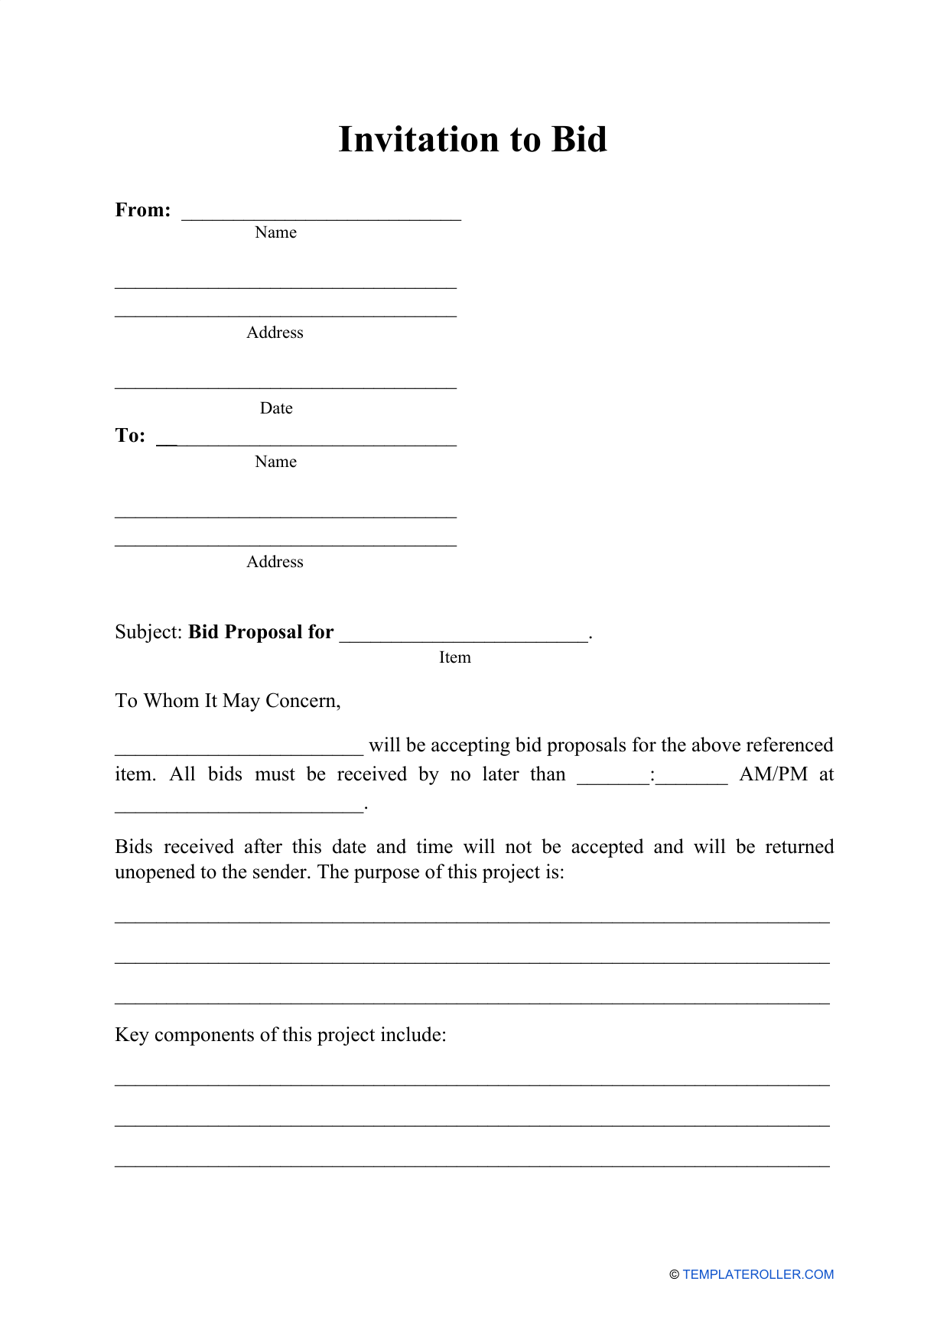 Invitation to Bid Template, Page 1